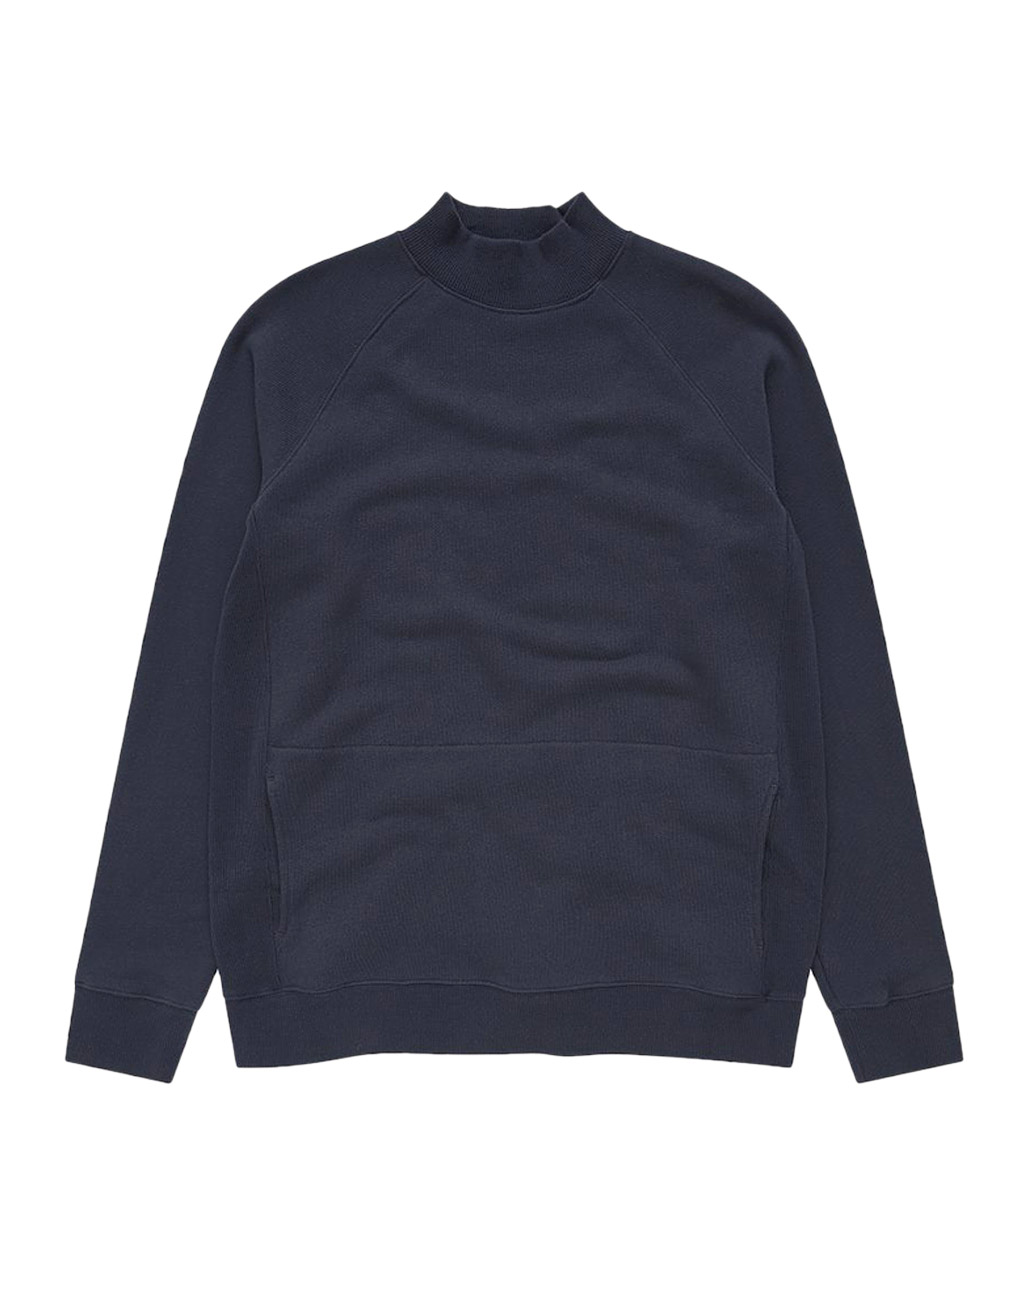 You Must Create – Touche pocket sweatshirt